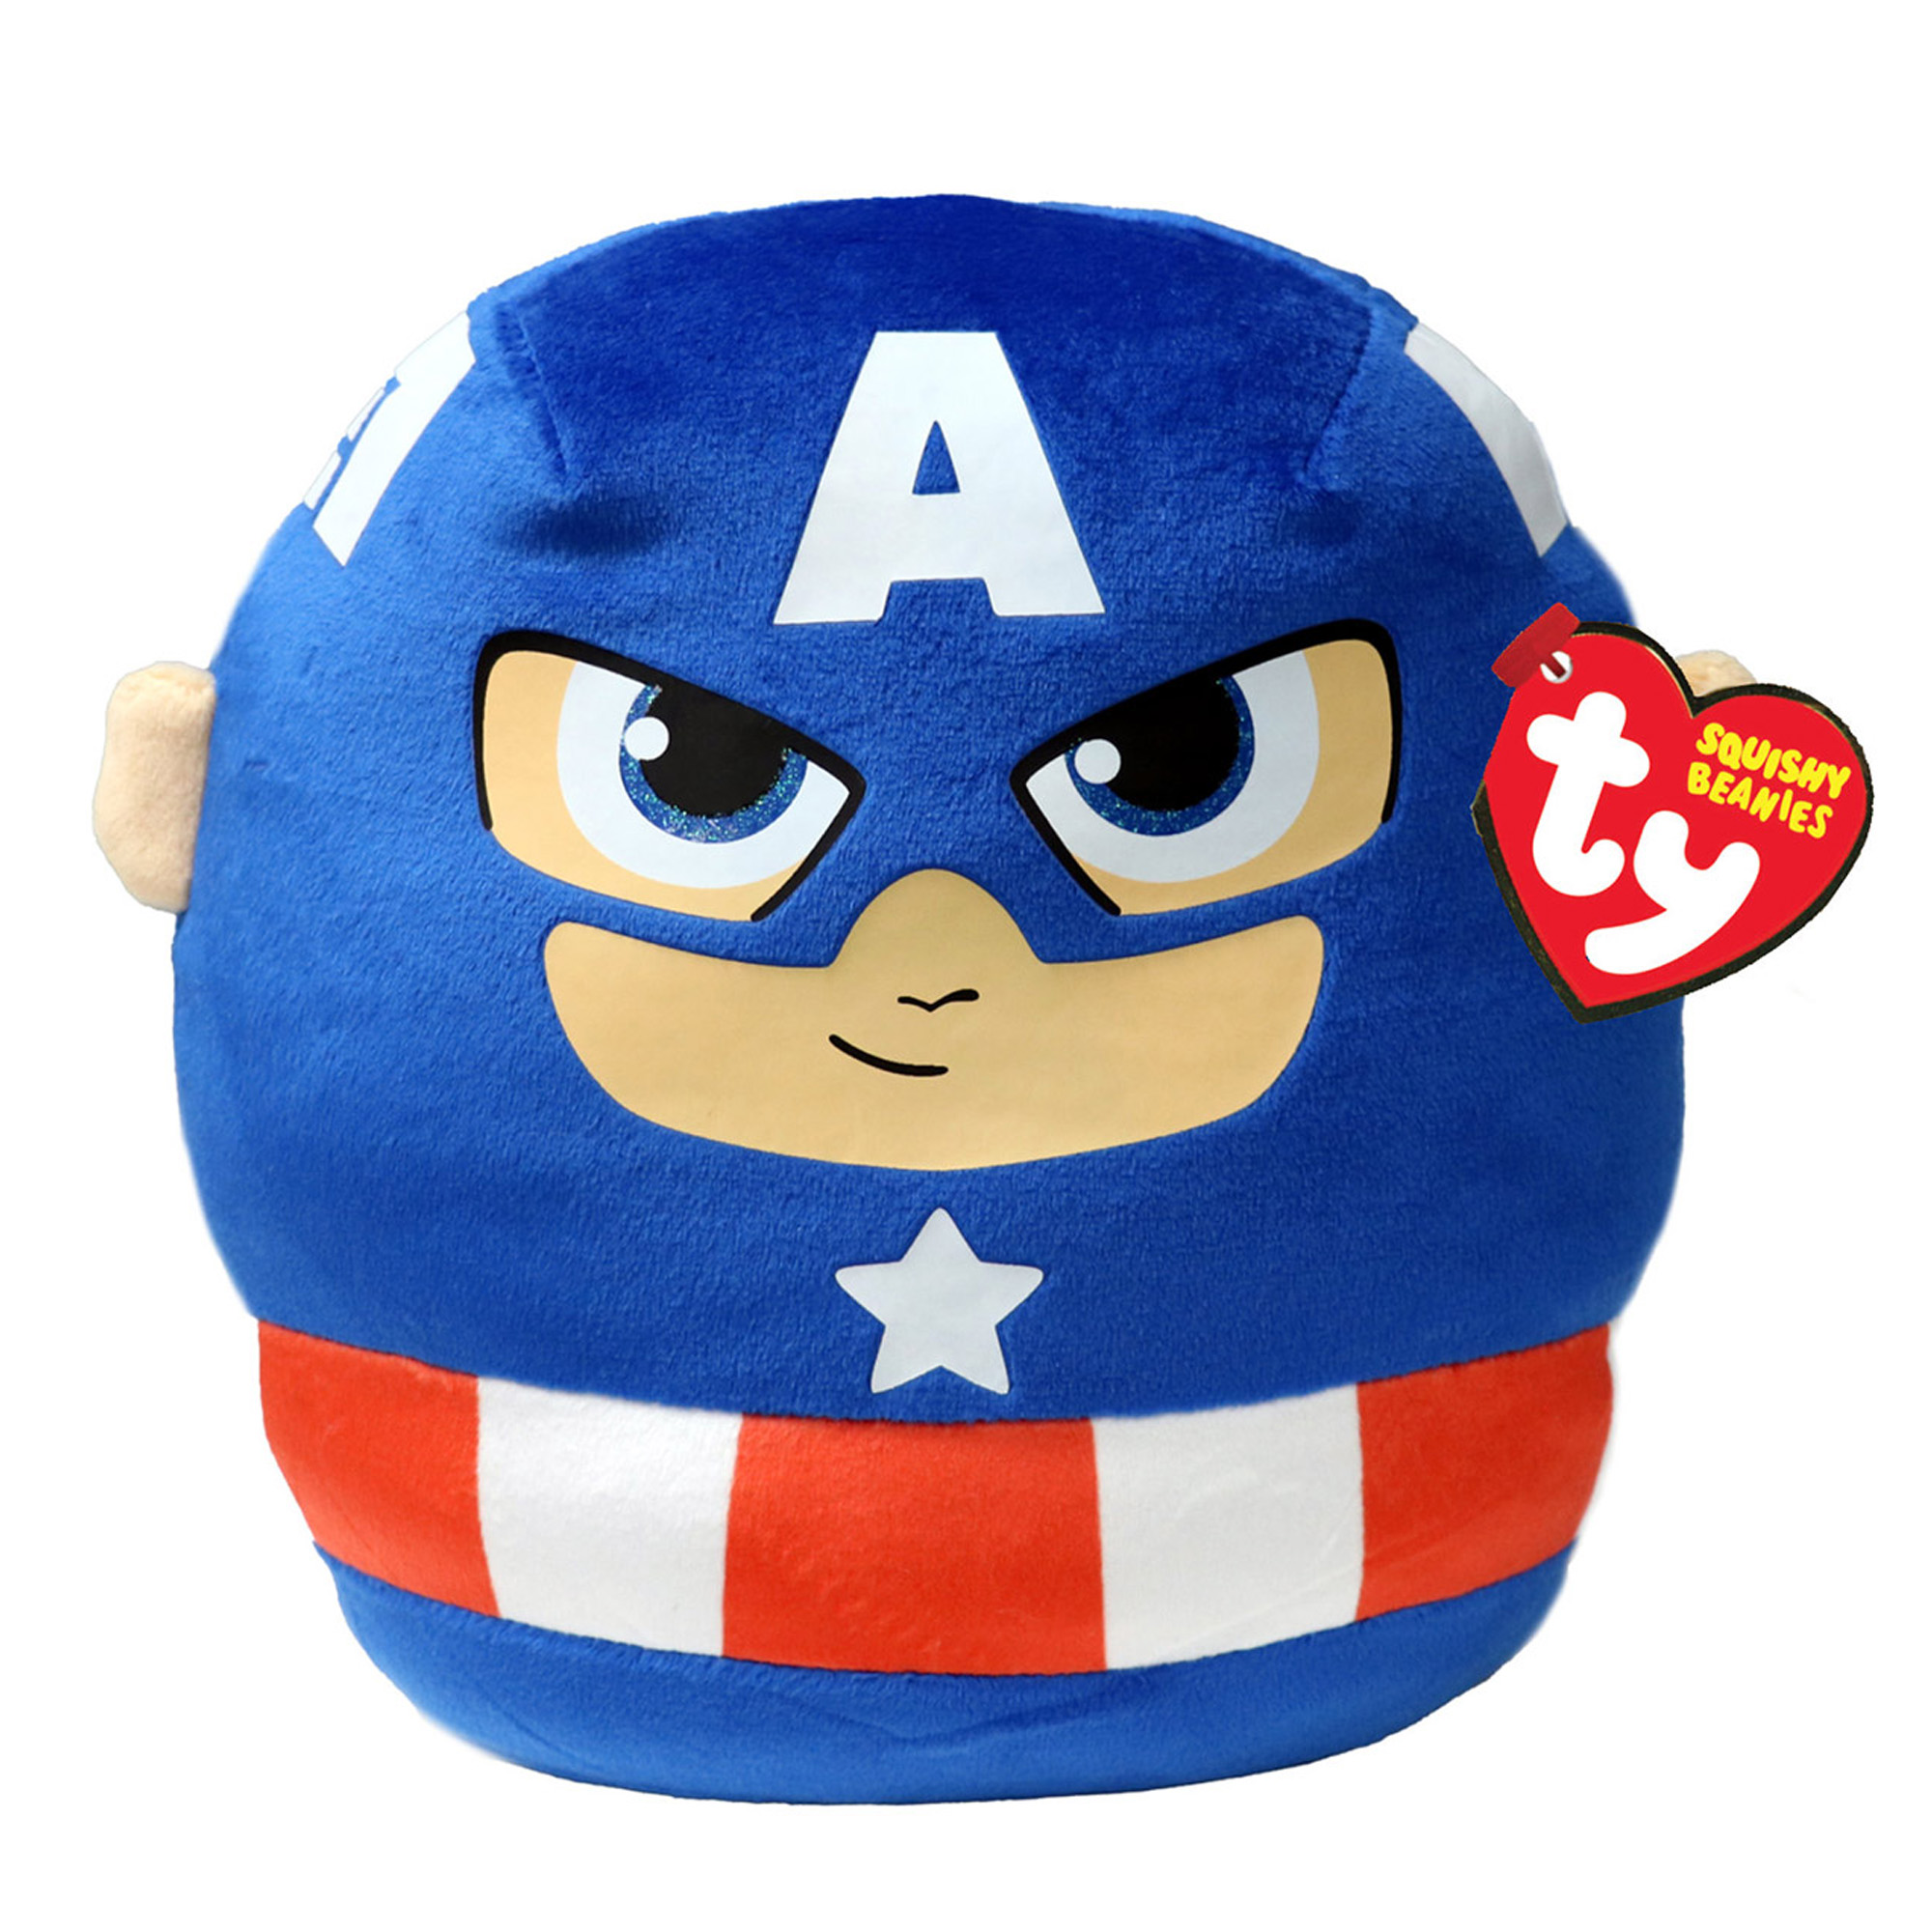 Captain America Squishy Beanies Plüschkissen (35 cm) - Marvel